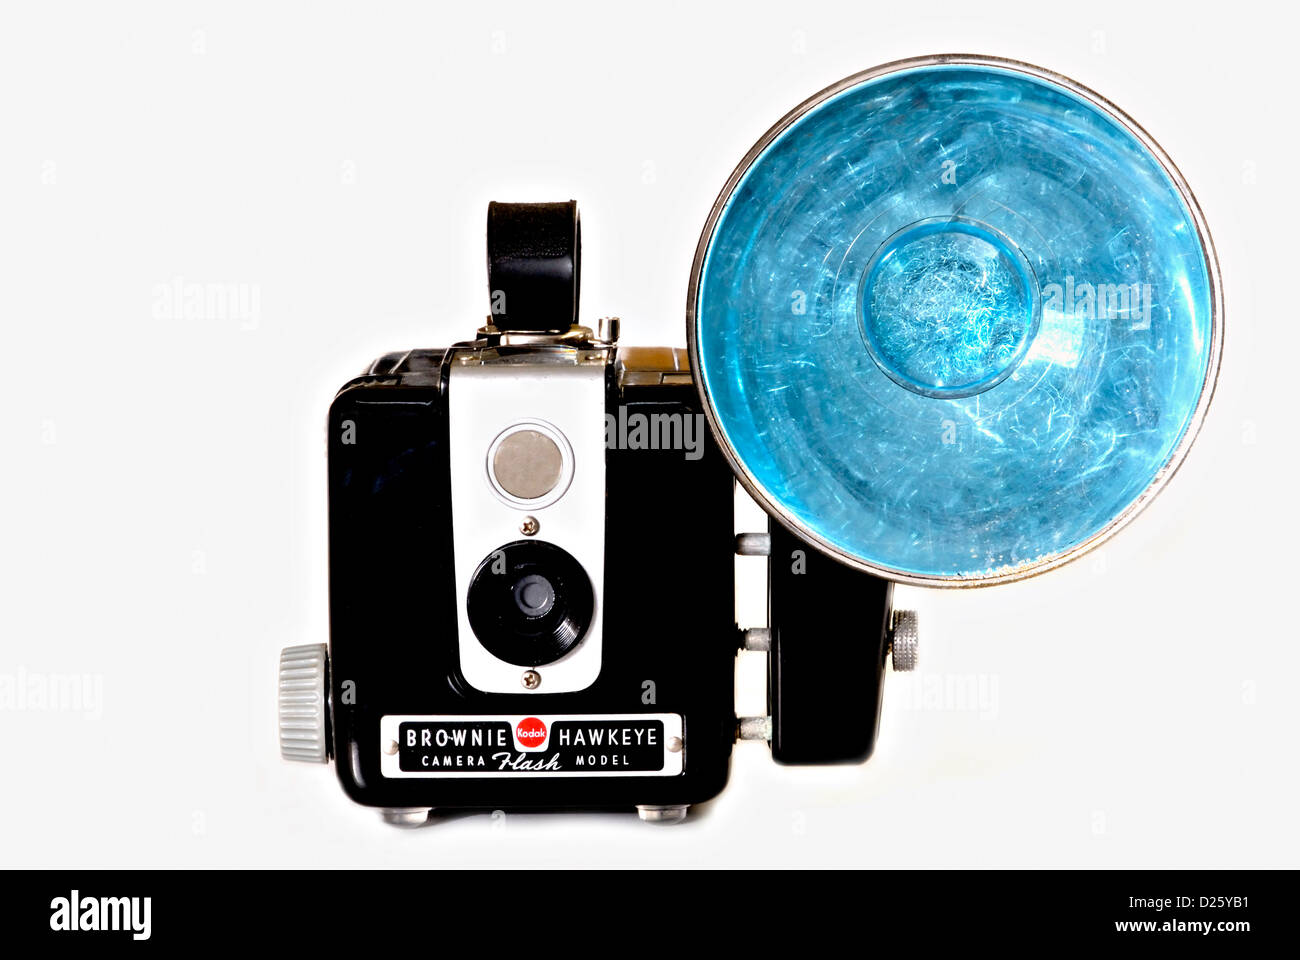 Brownie Hawkeye Camera and flash Stock Photo